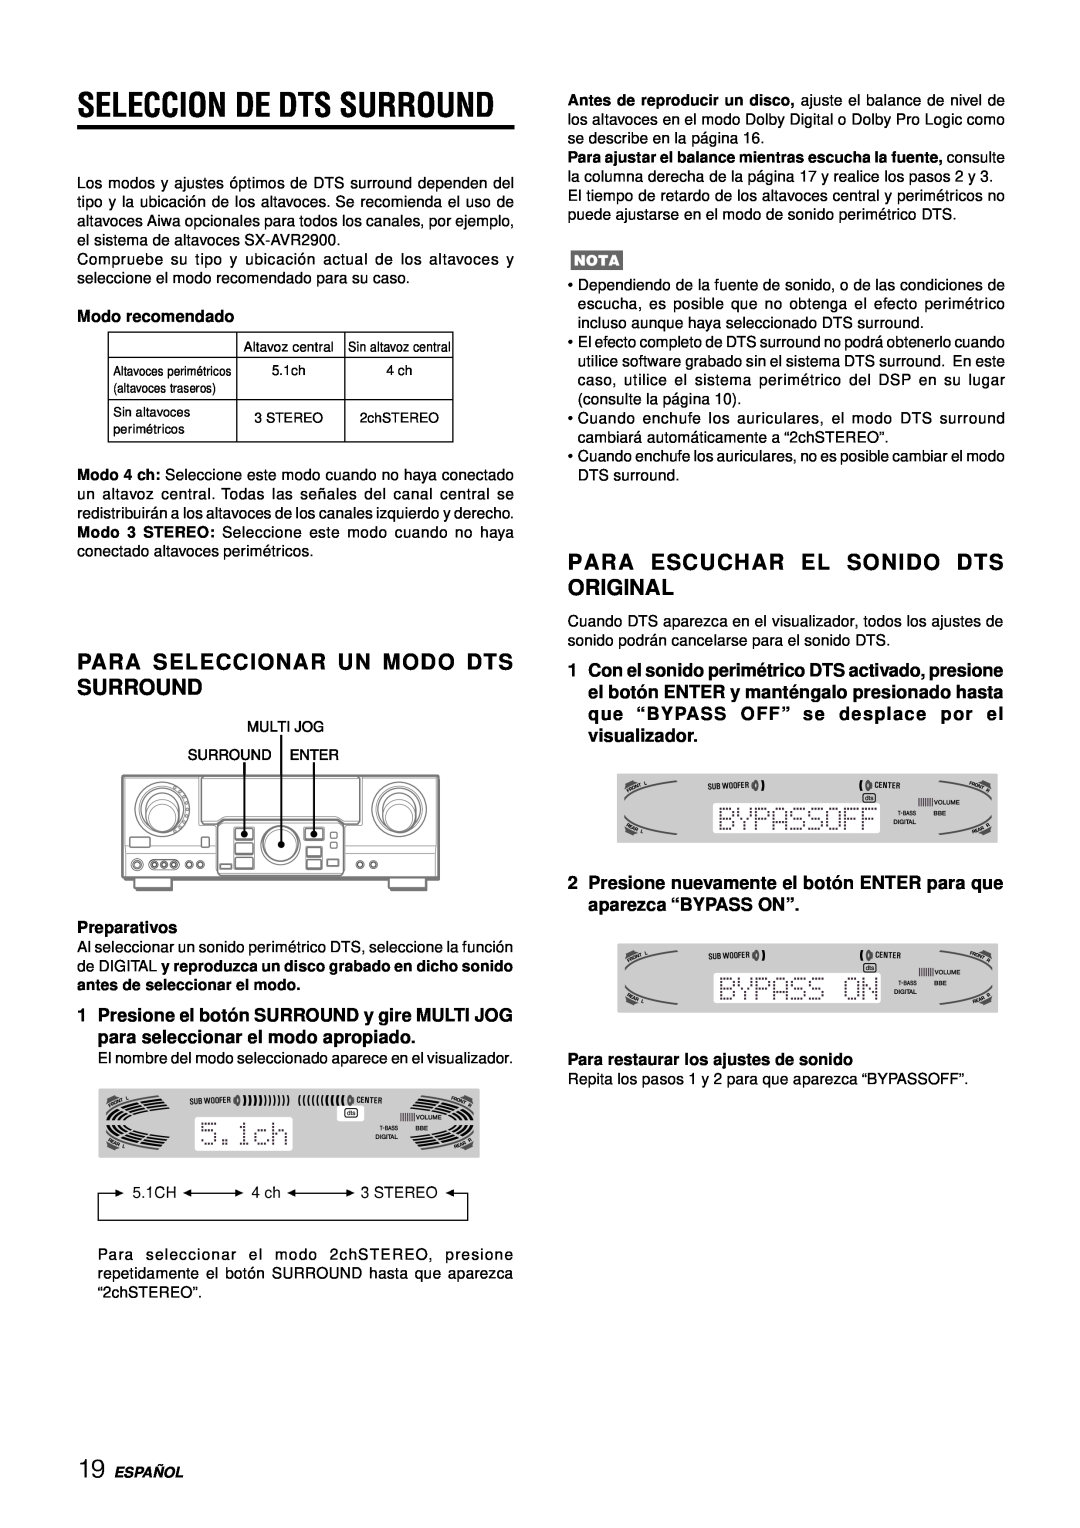 Aiwa AV-D77 manual Seleccion De Dts Surround, Para Seleccionar Un Modo Dts Surround, Para Escuchar El Sonido Dts Original 